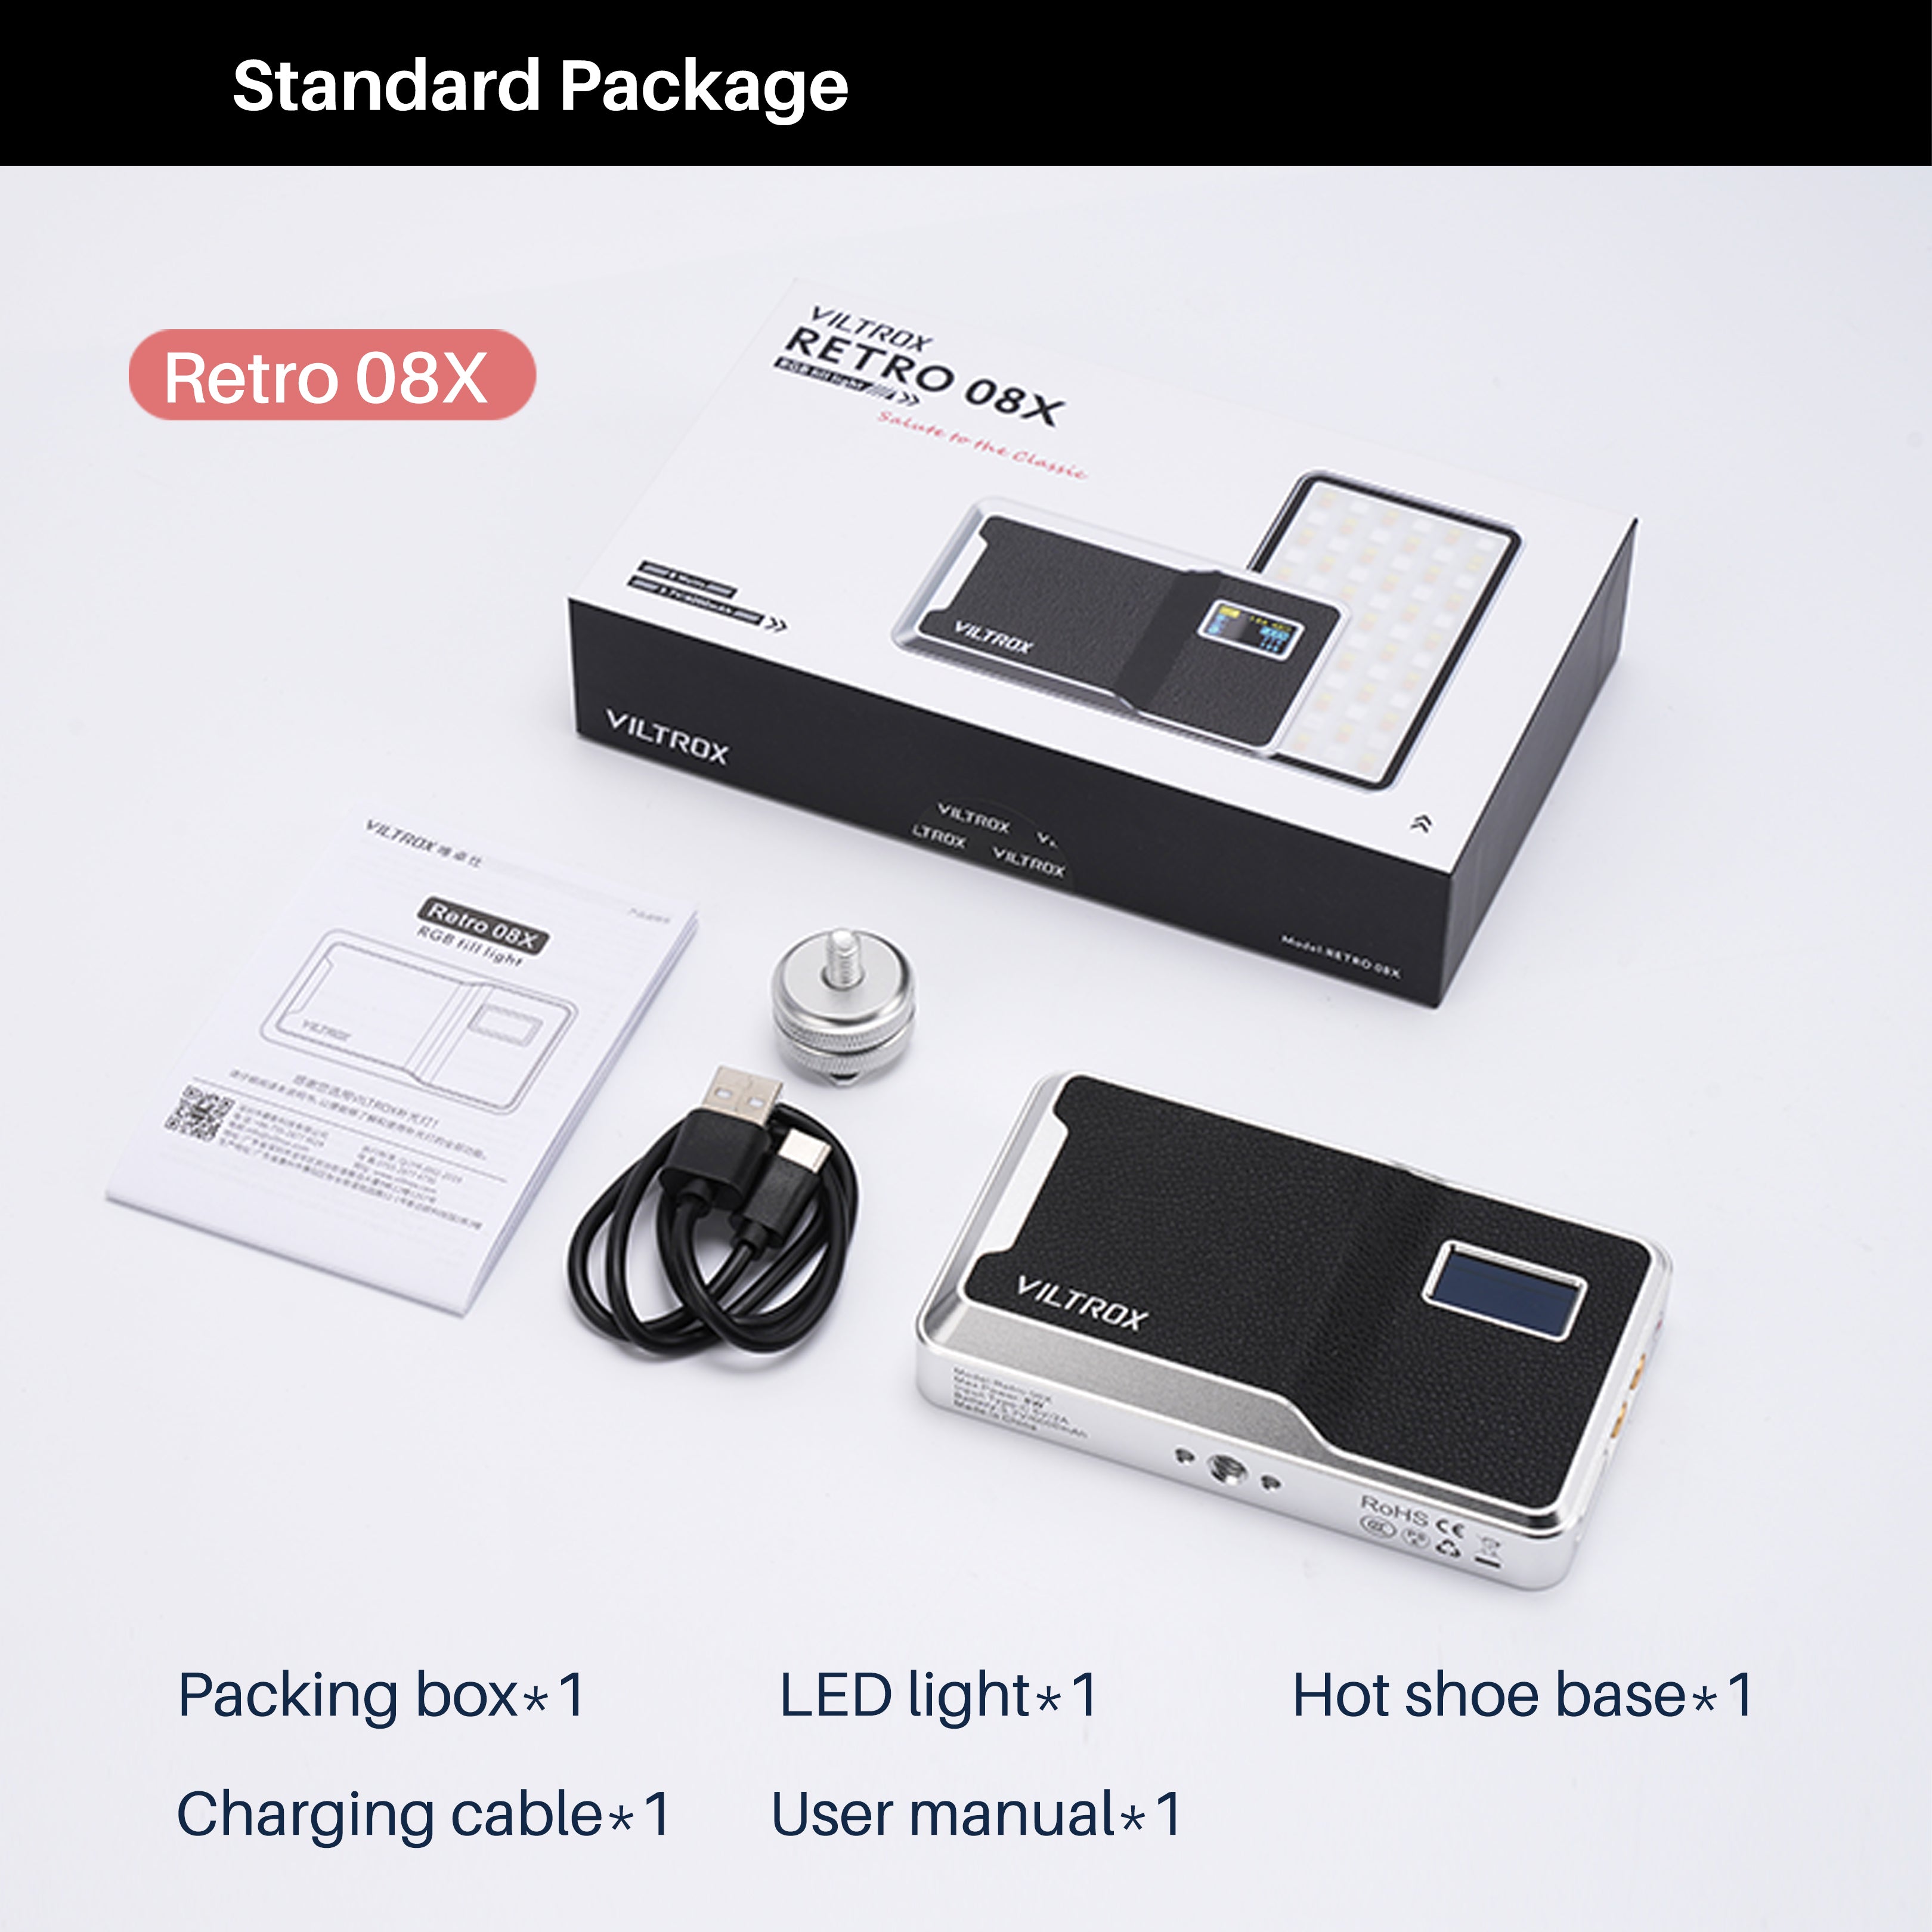 Viltrox Retro 08X Retro 12X 2500K~8500K Portable RGB LED Light WIth 26  Lighting Effects Mobile APP Control